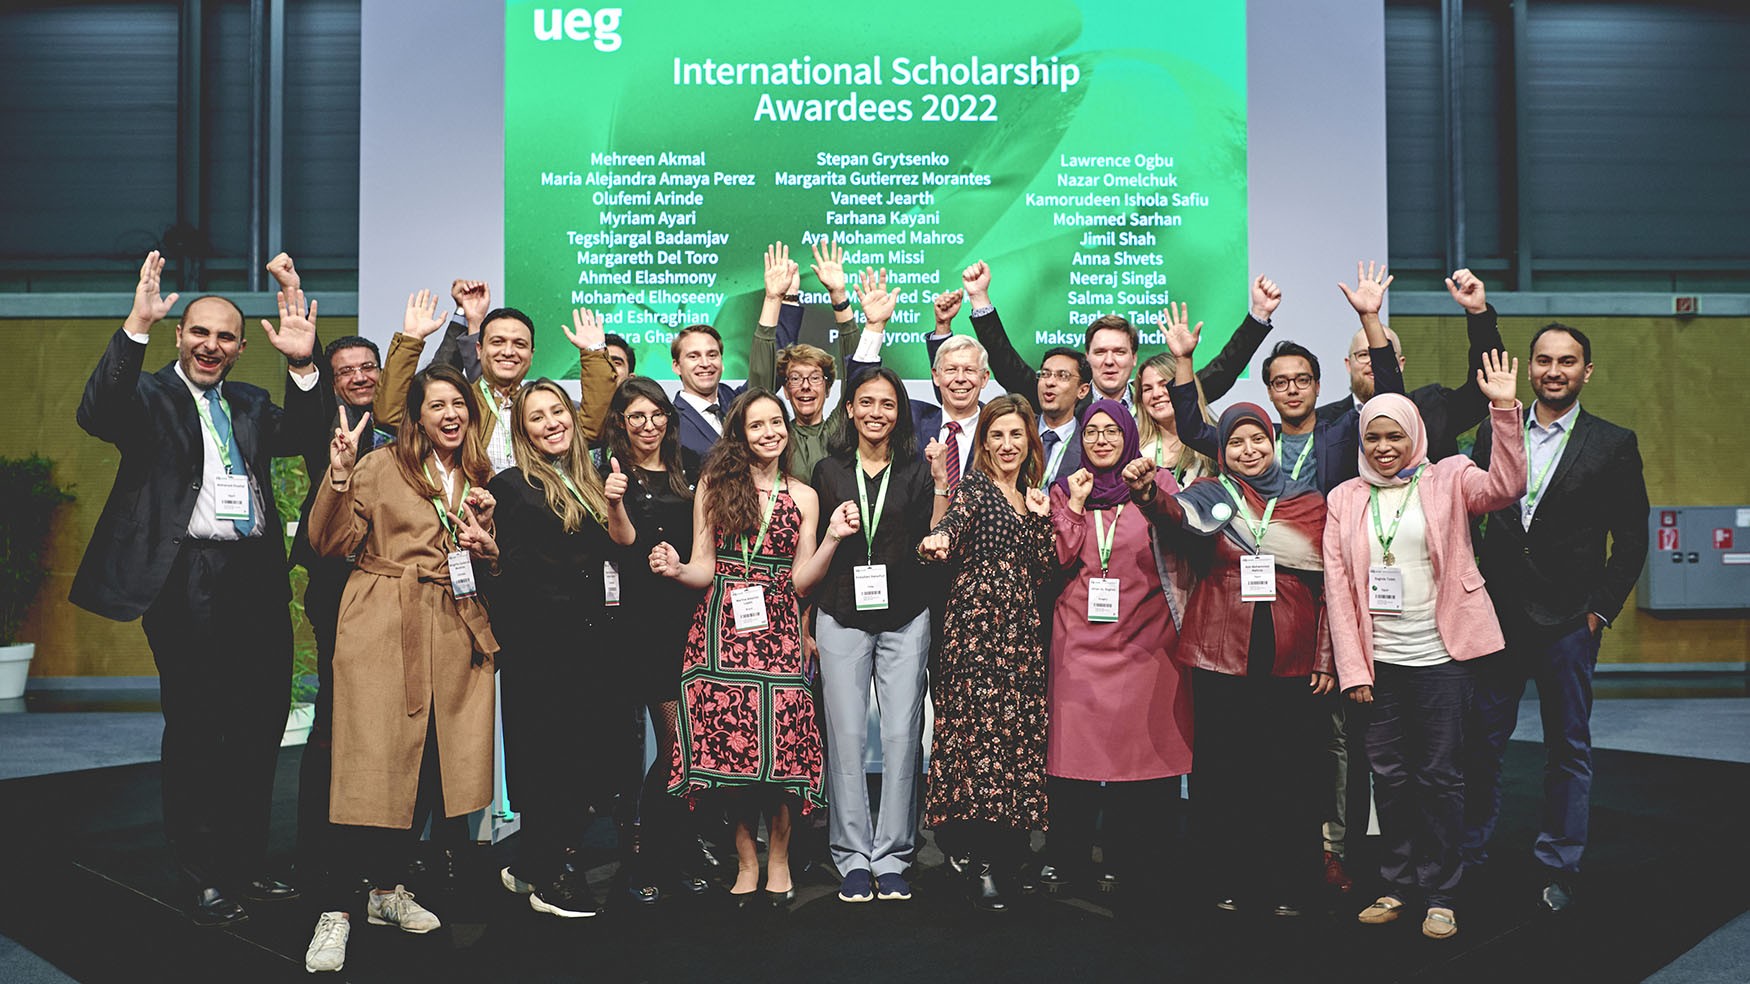 International Scholarship Awardees 2022